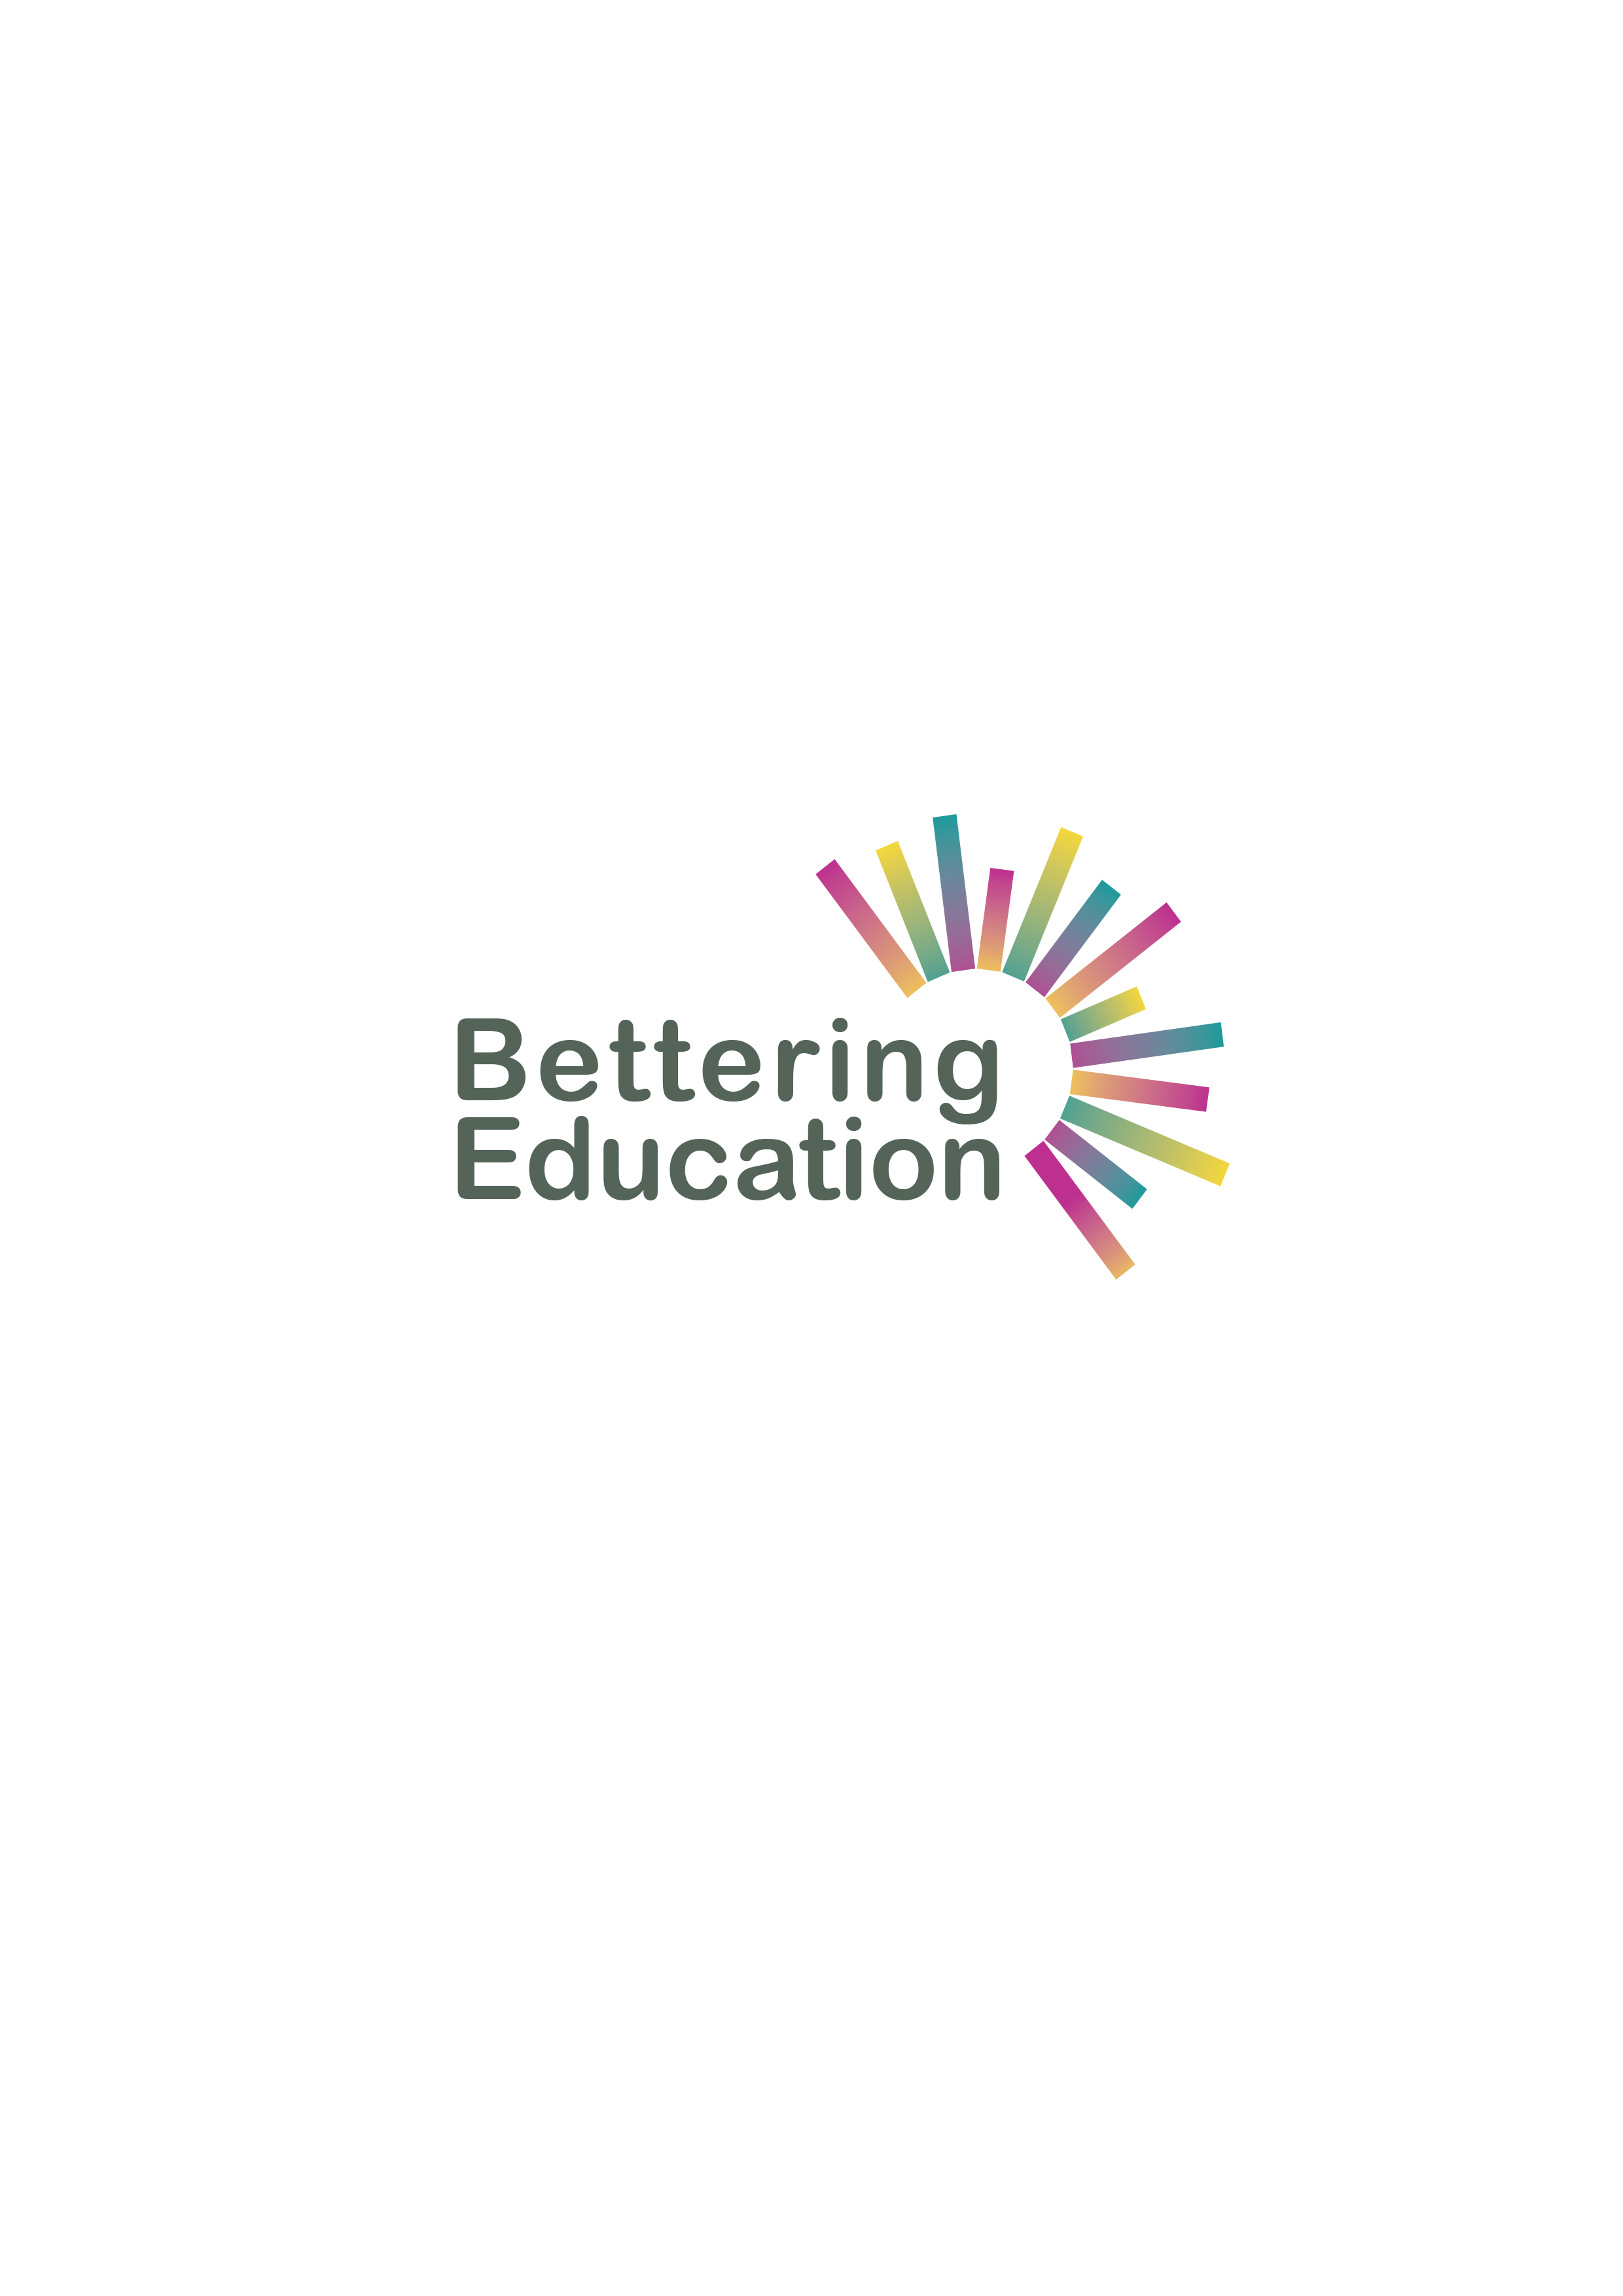 Bettering Education logo